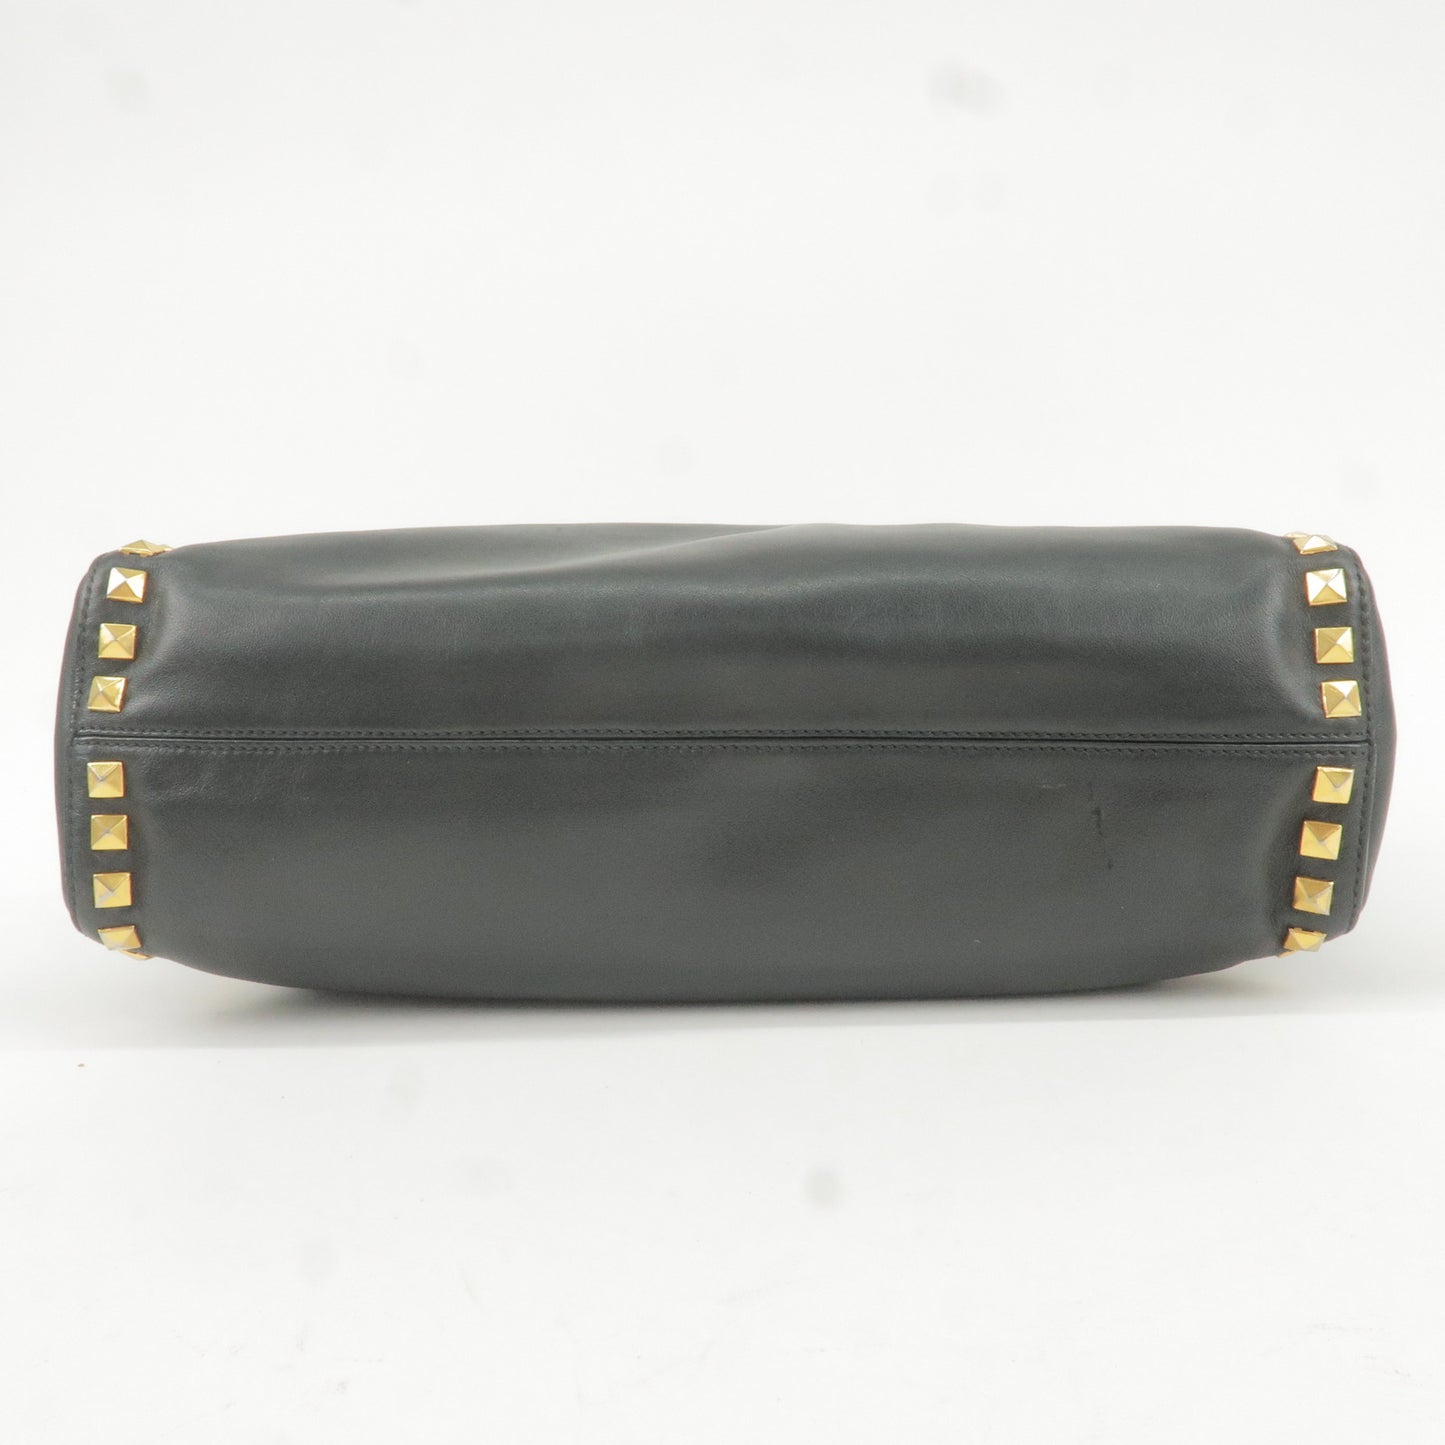 MIU MIU Leather Studs Tote Bag Hand Bag Black RR1906